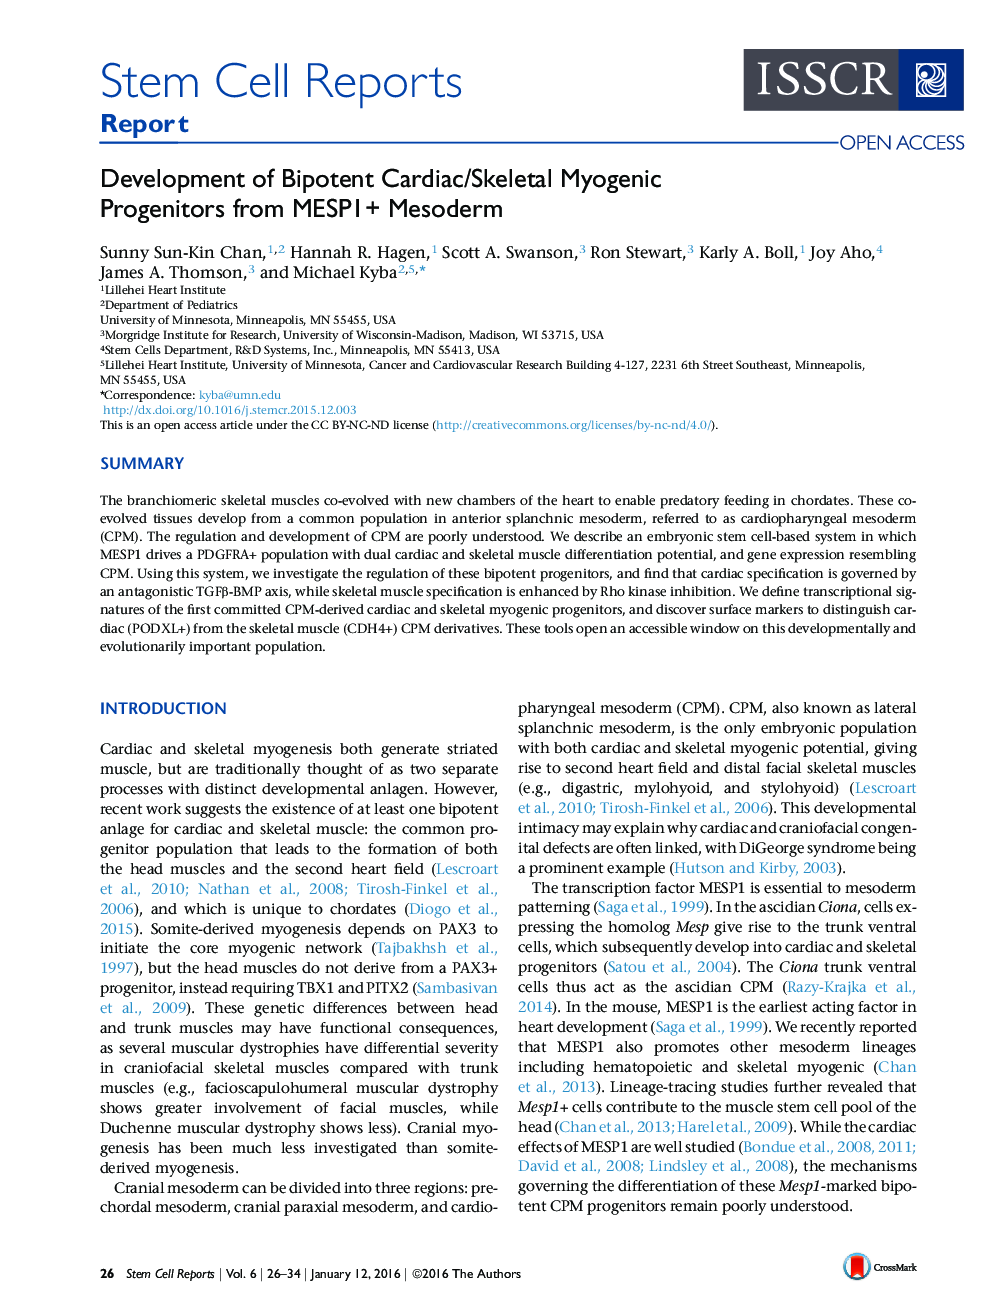 Development of Bipotent Cardiac/Skeletal Myogenic Progenitors from MESP1+ Mesoderm 